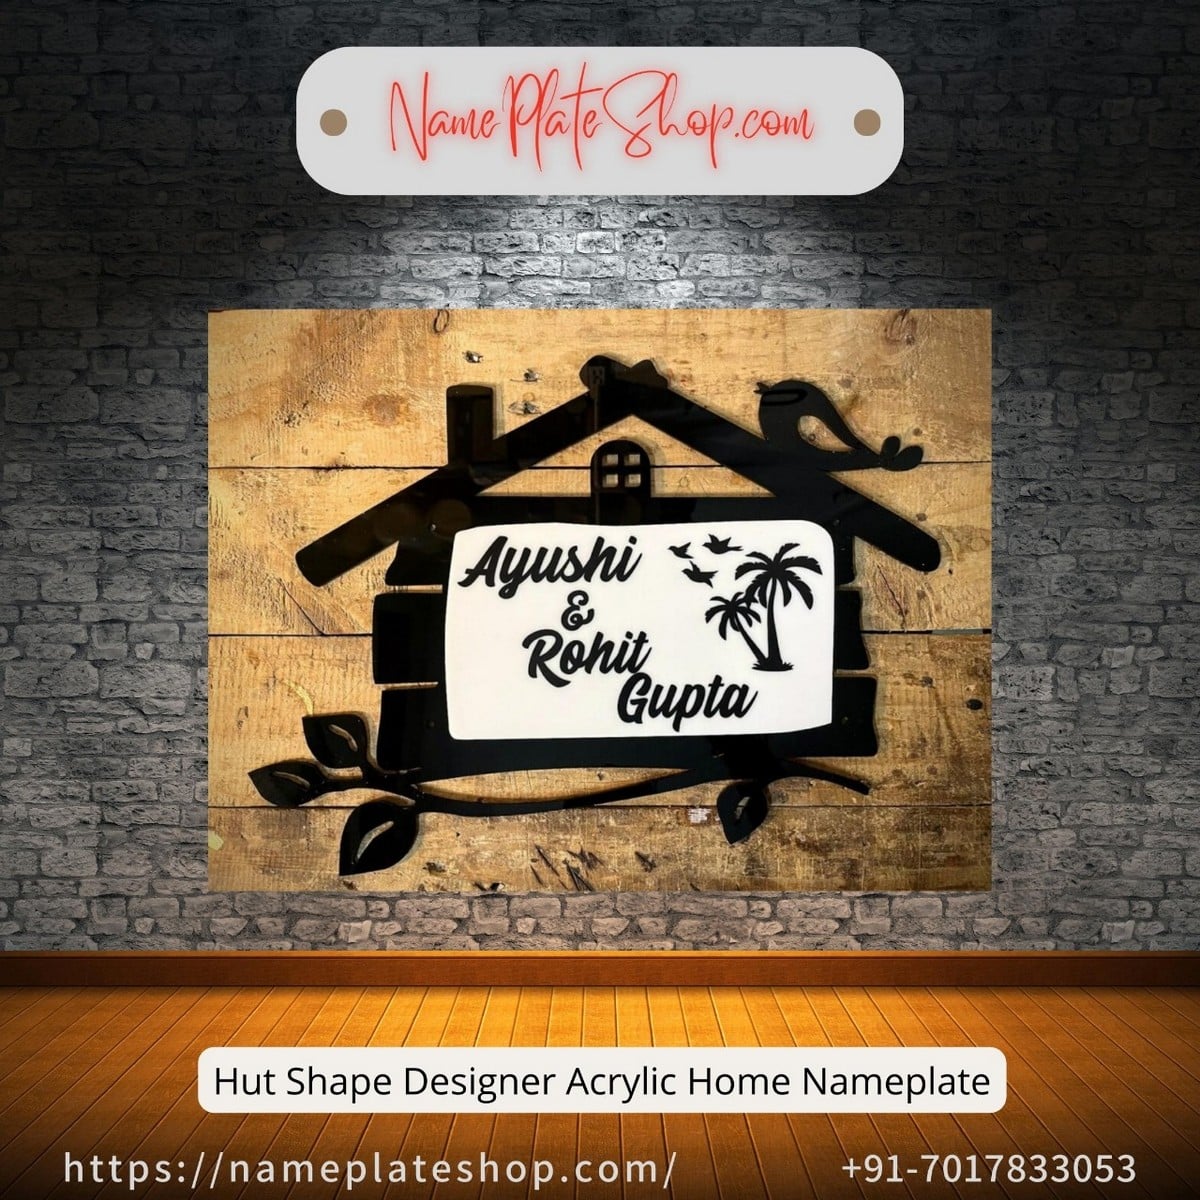 https://nameplateshop.com/wp-content/uploads/2022/08/Hut-Shape-Designer-Acrylic-Home-Name-Plate-At-Best-Price.jpg